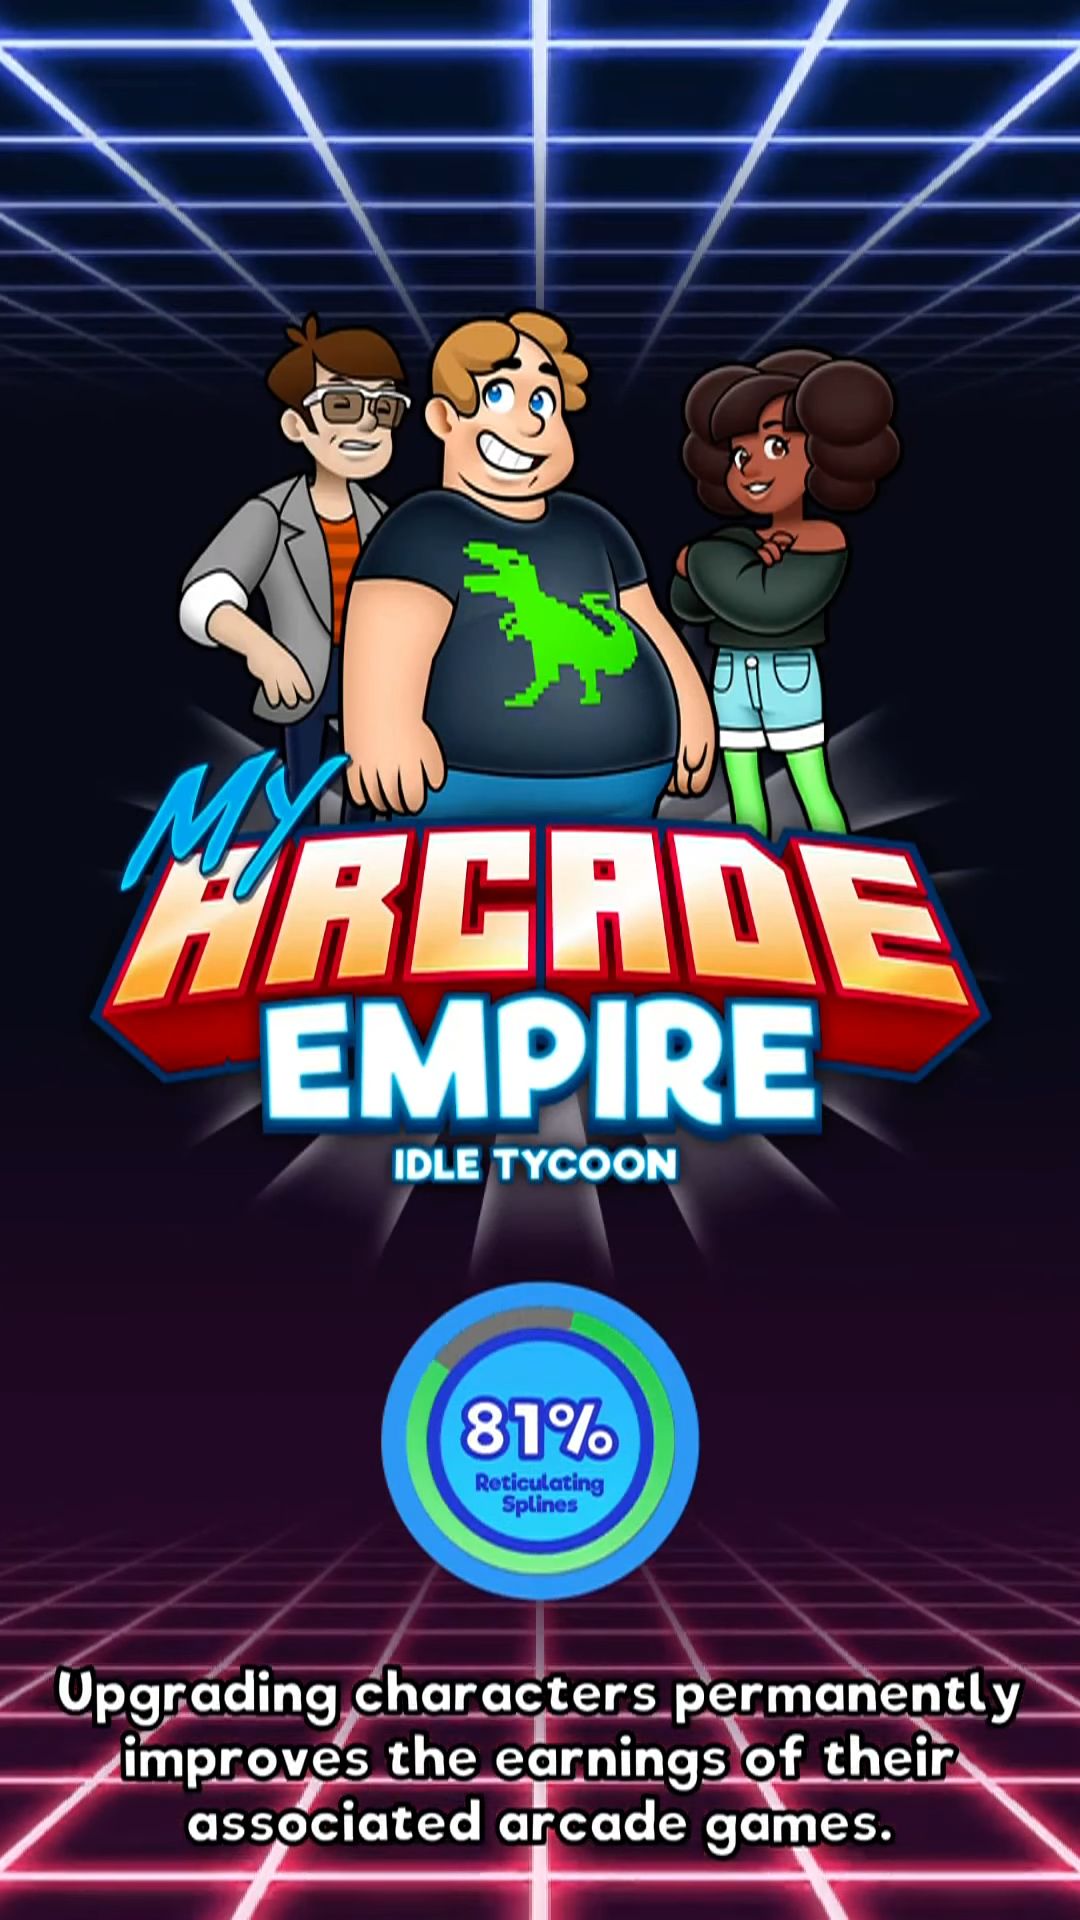 Download My Arcade Empire - Idle Tycoon für Android kostenlos.